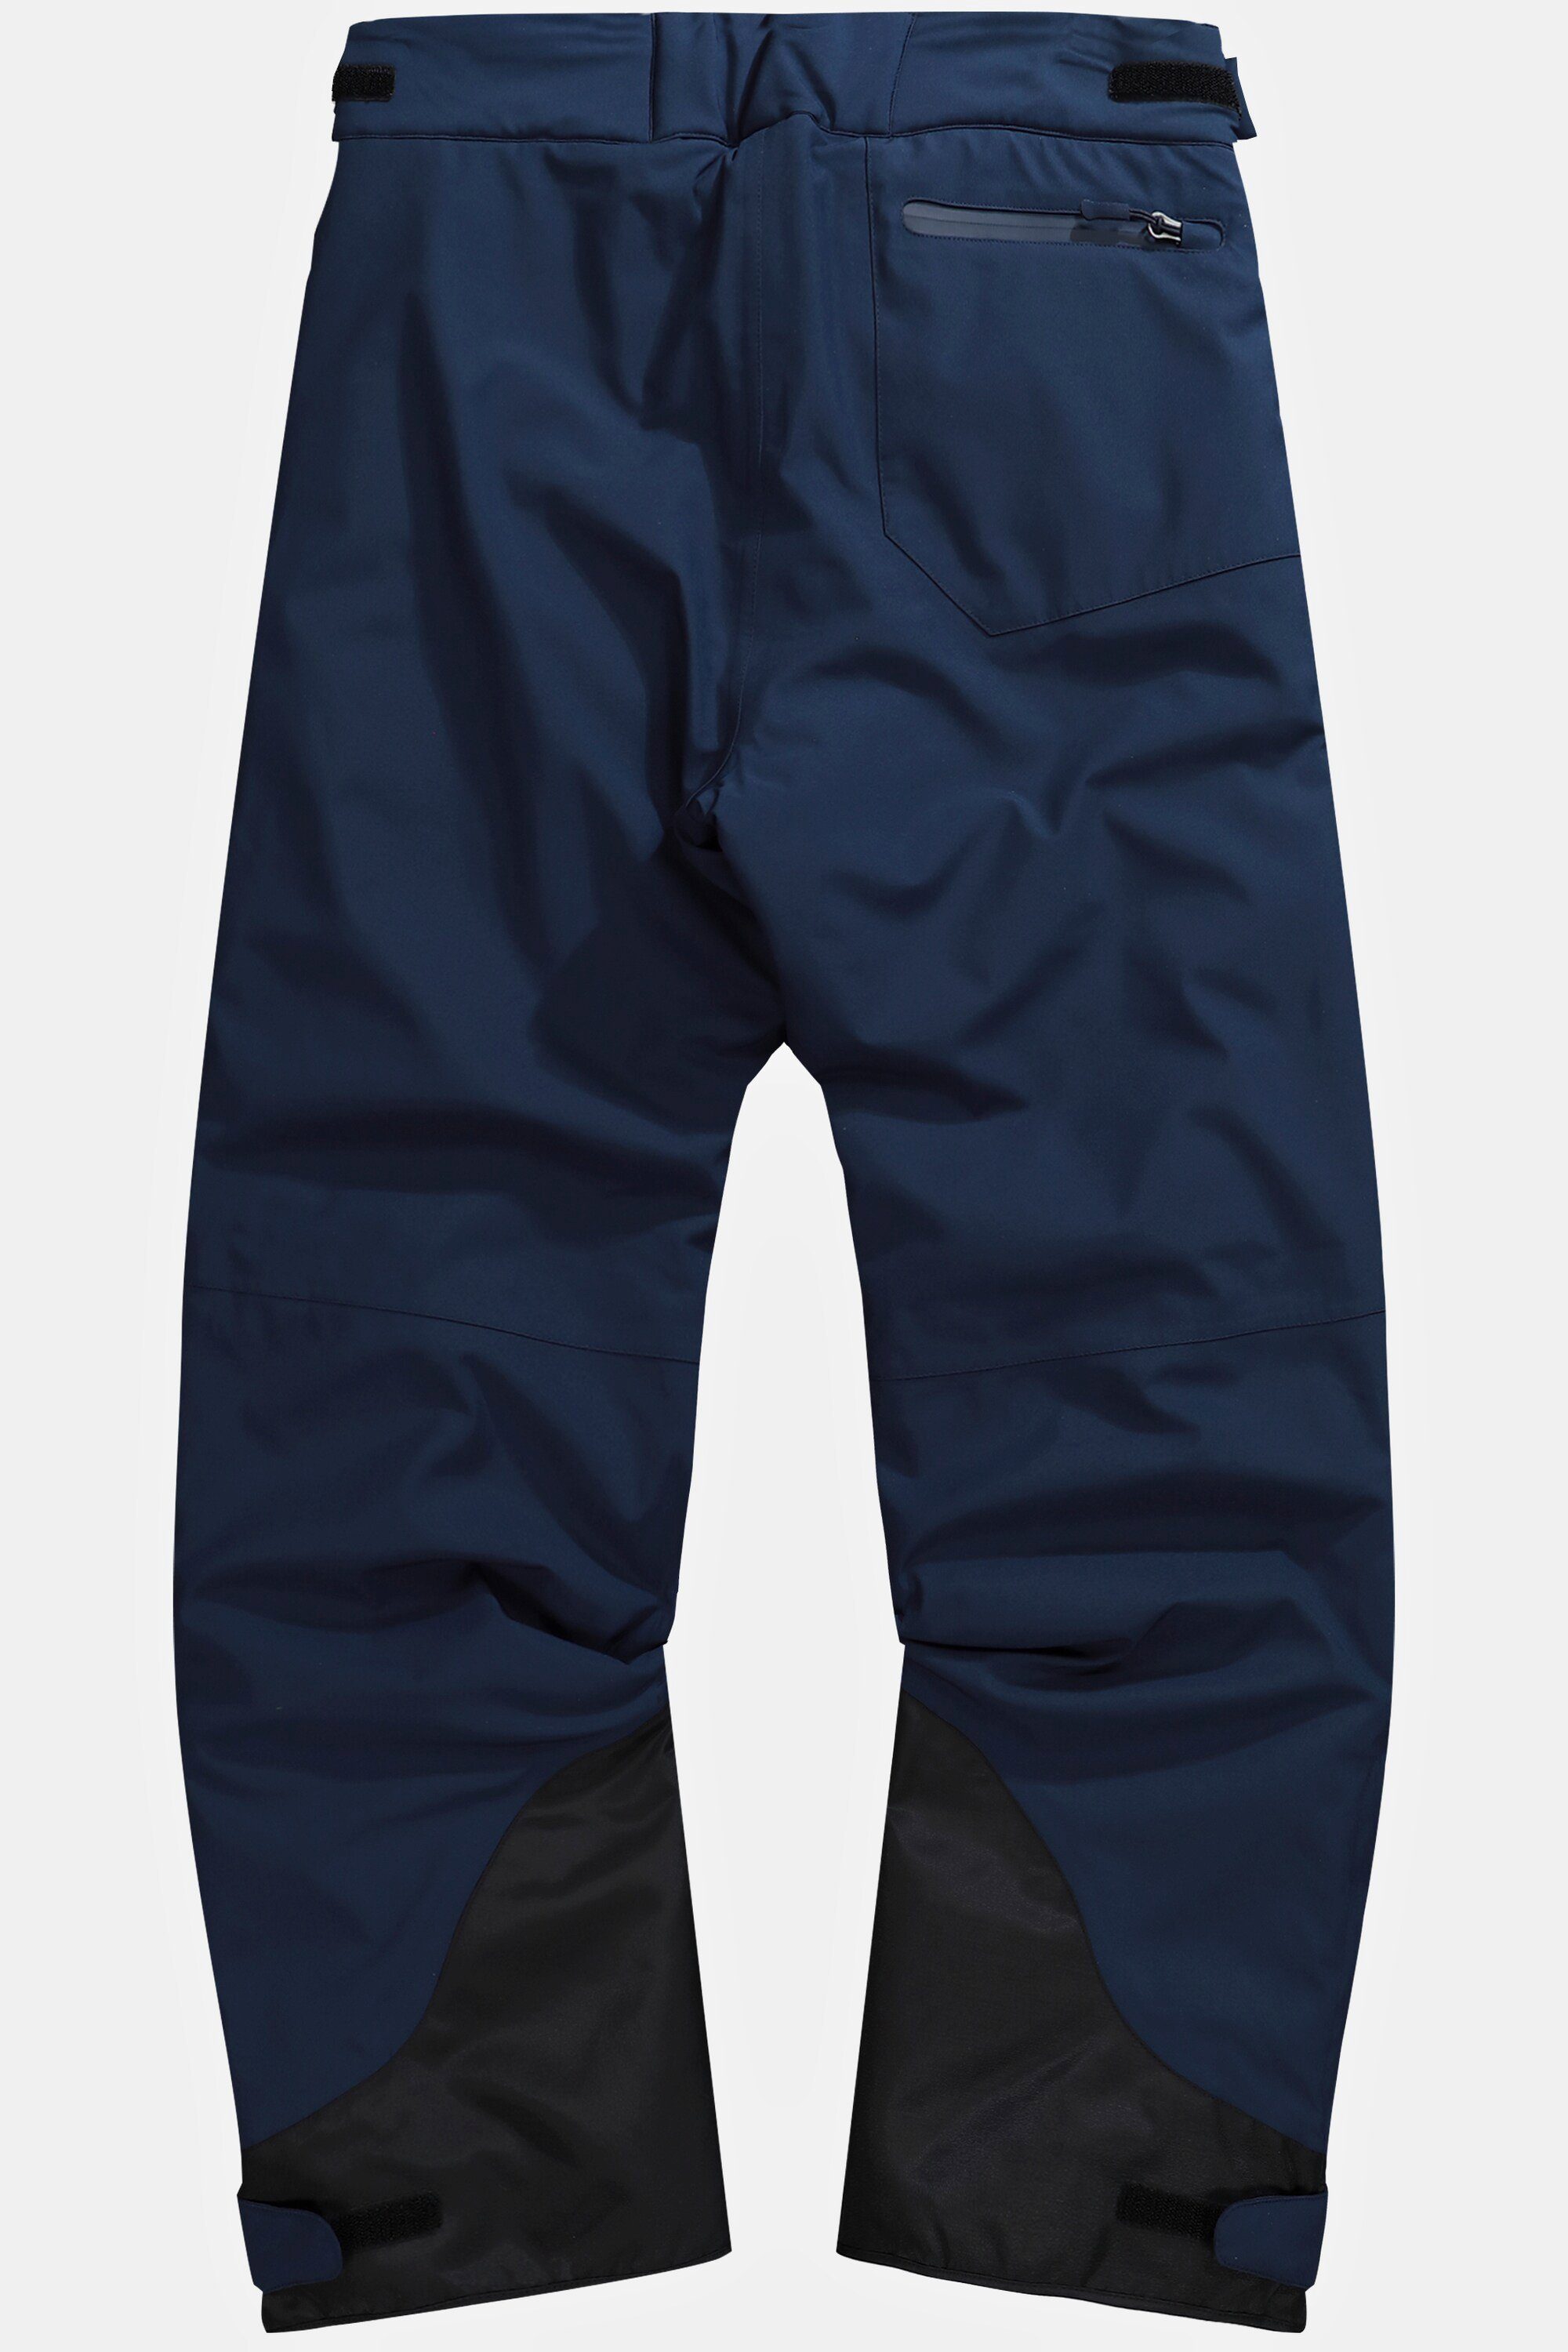 Bauchfit navy Skihose JP1880 blau Skihose Funktions-Qualität Skiwear